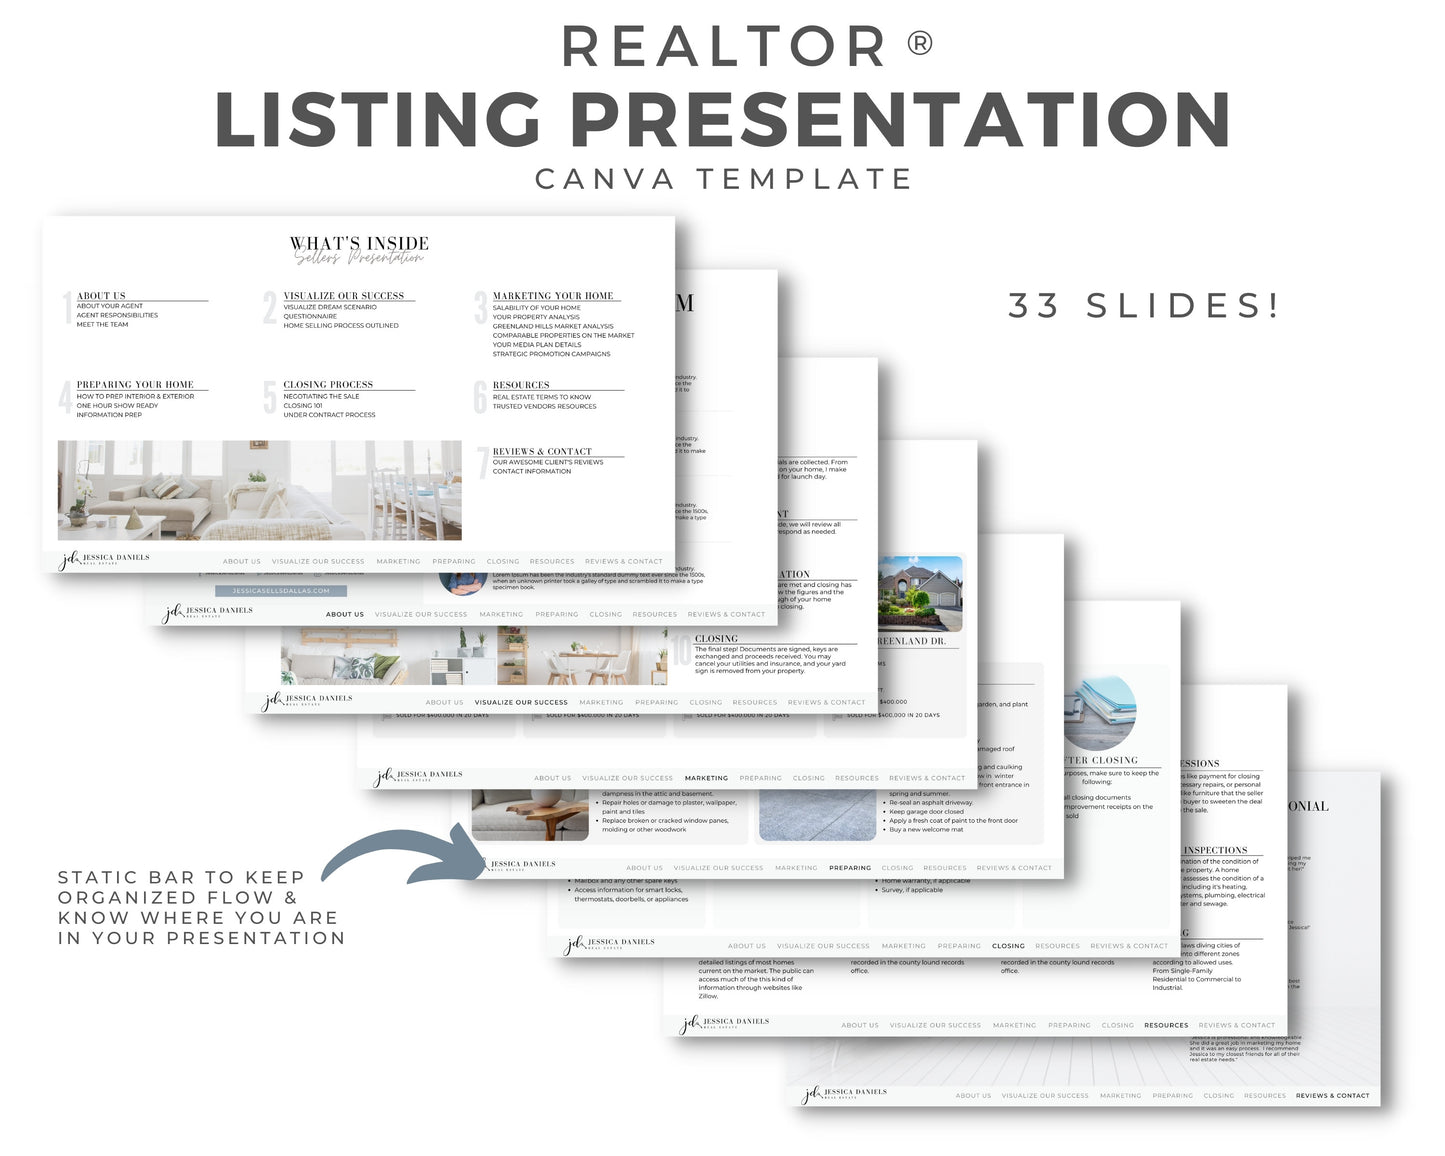 Real Estate Listing Presentation and Seller Guide Set Templates